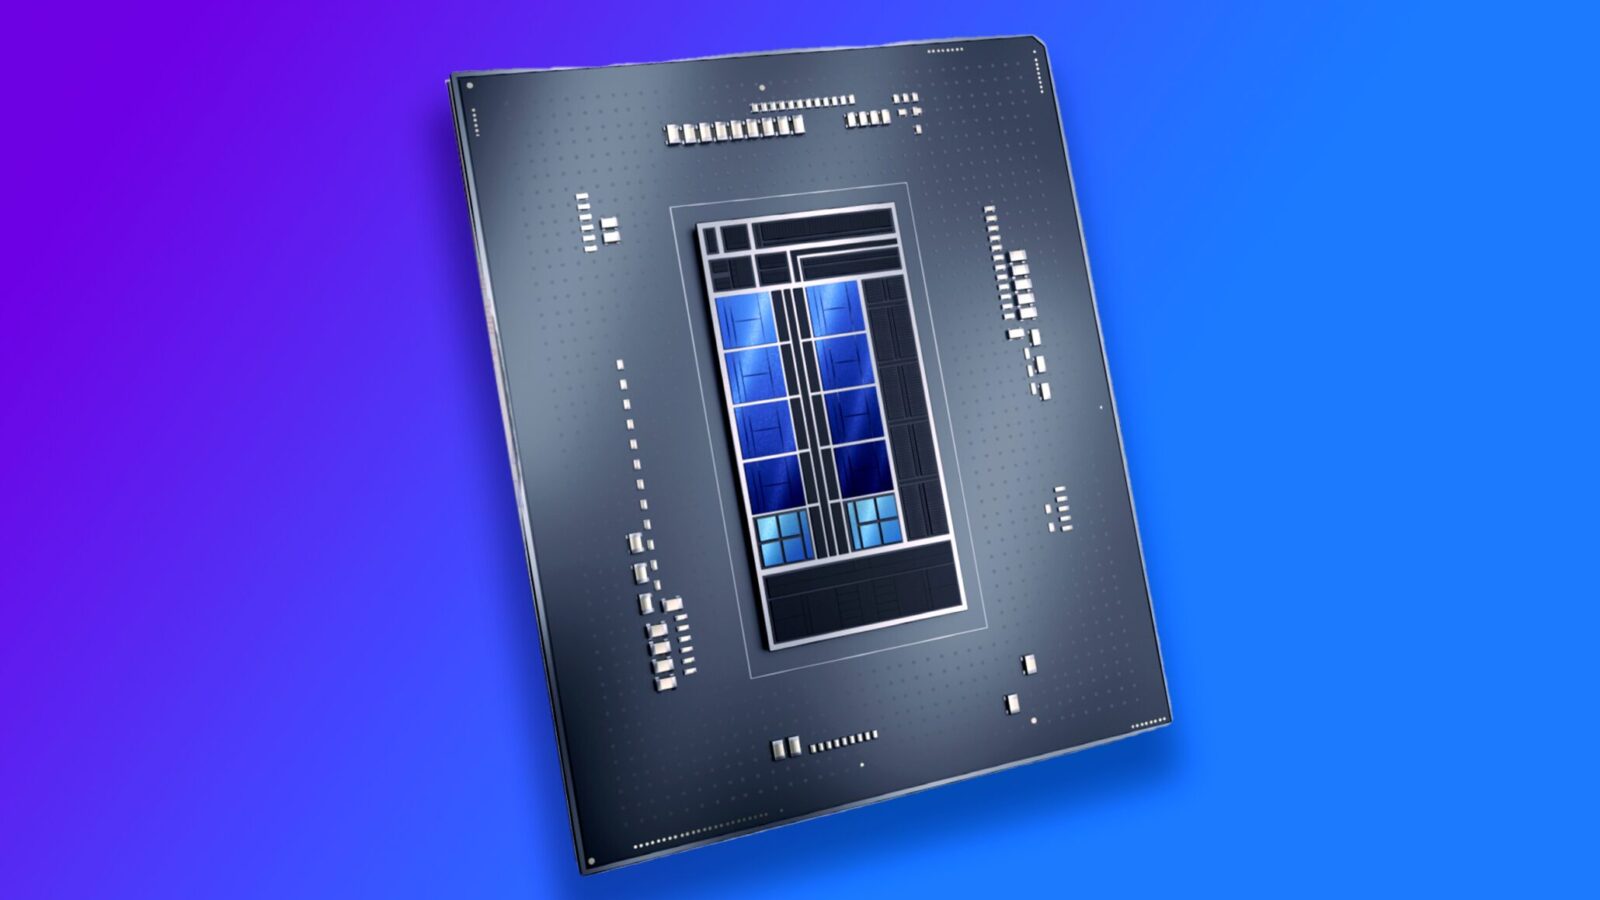 Intel Core i9 12900HK